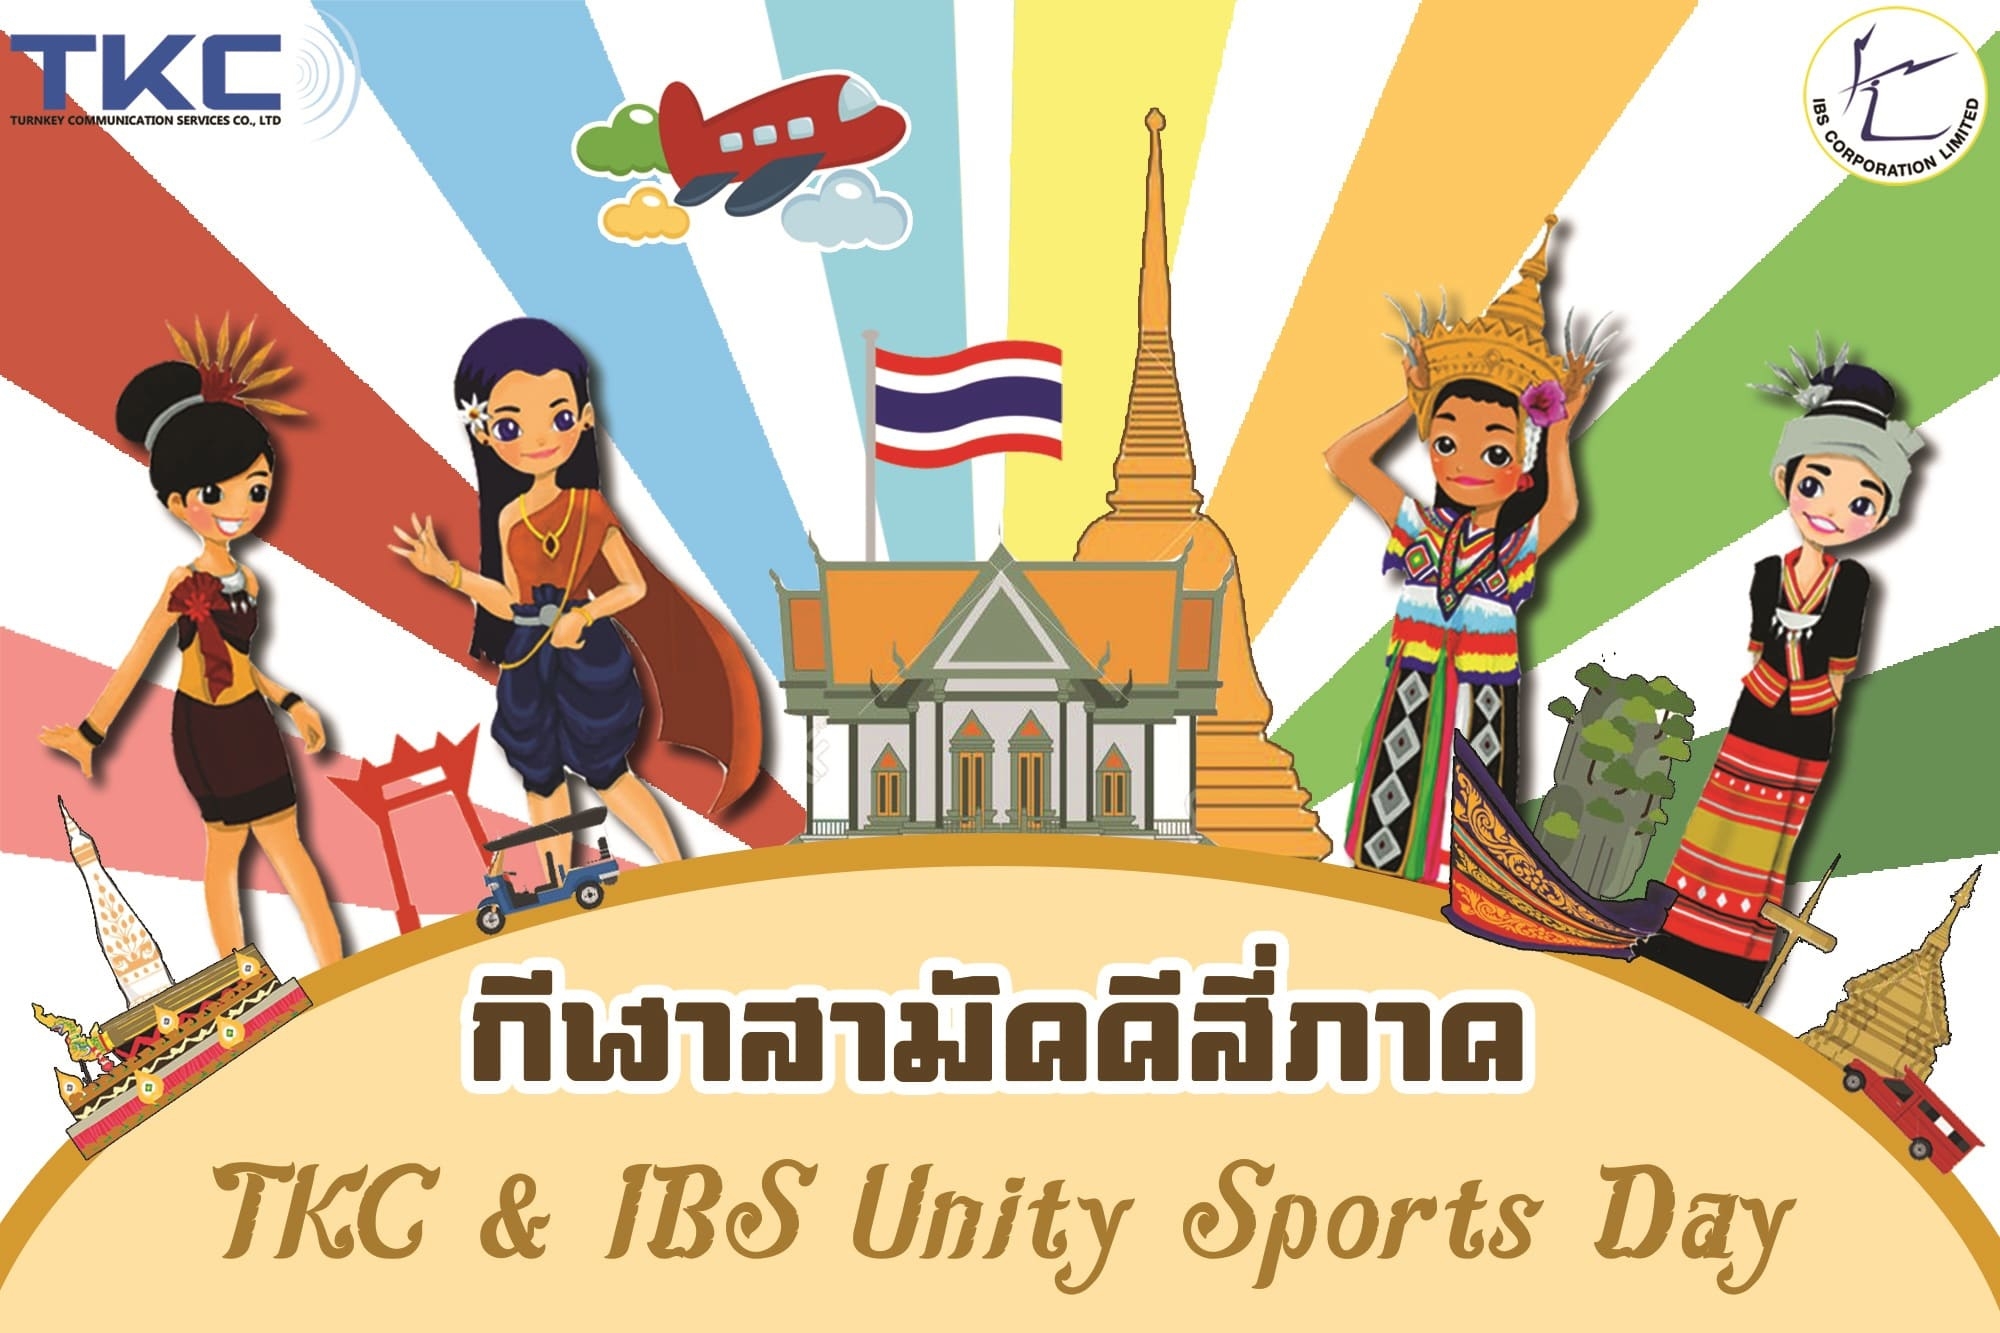 TKS & IBS Unity Sports Day